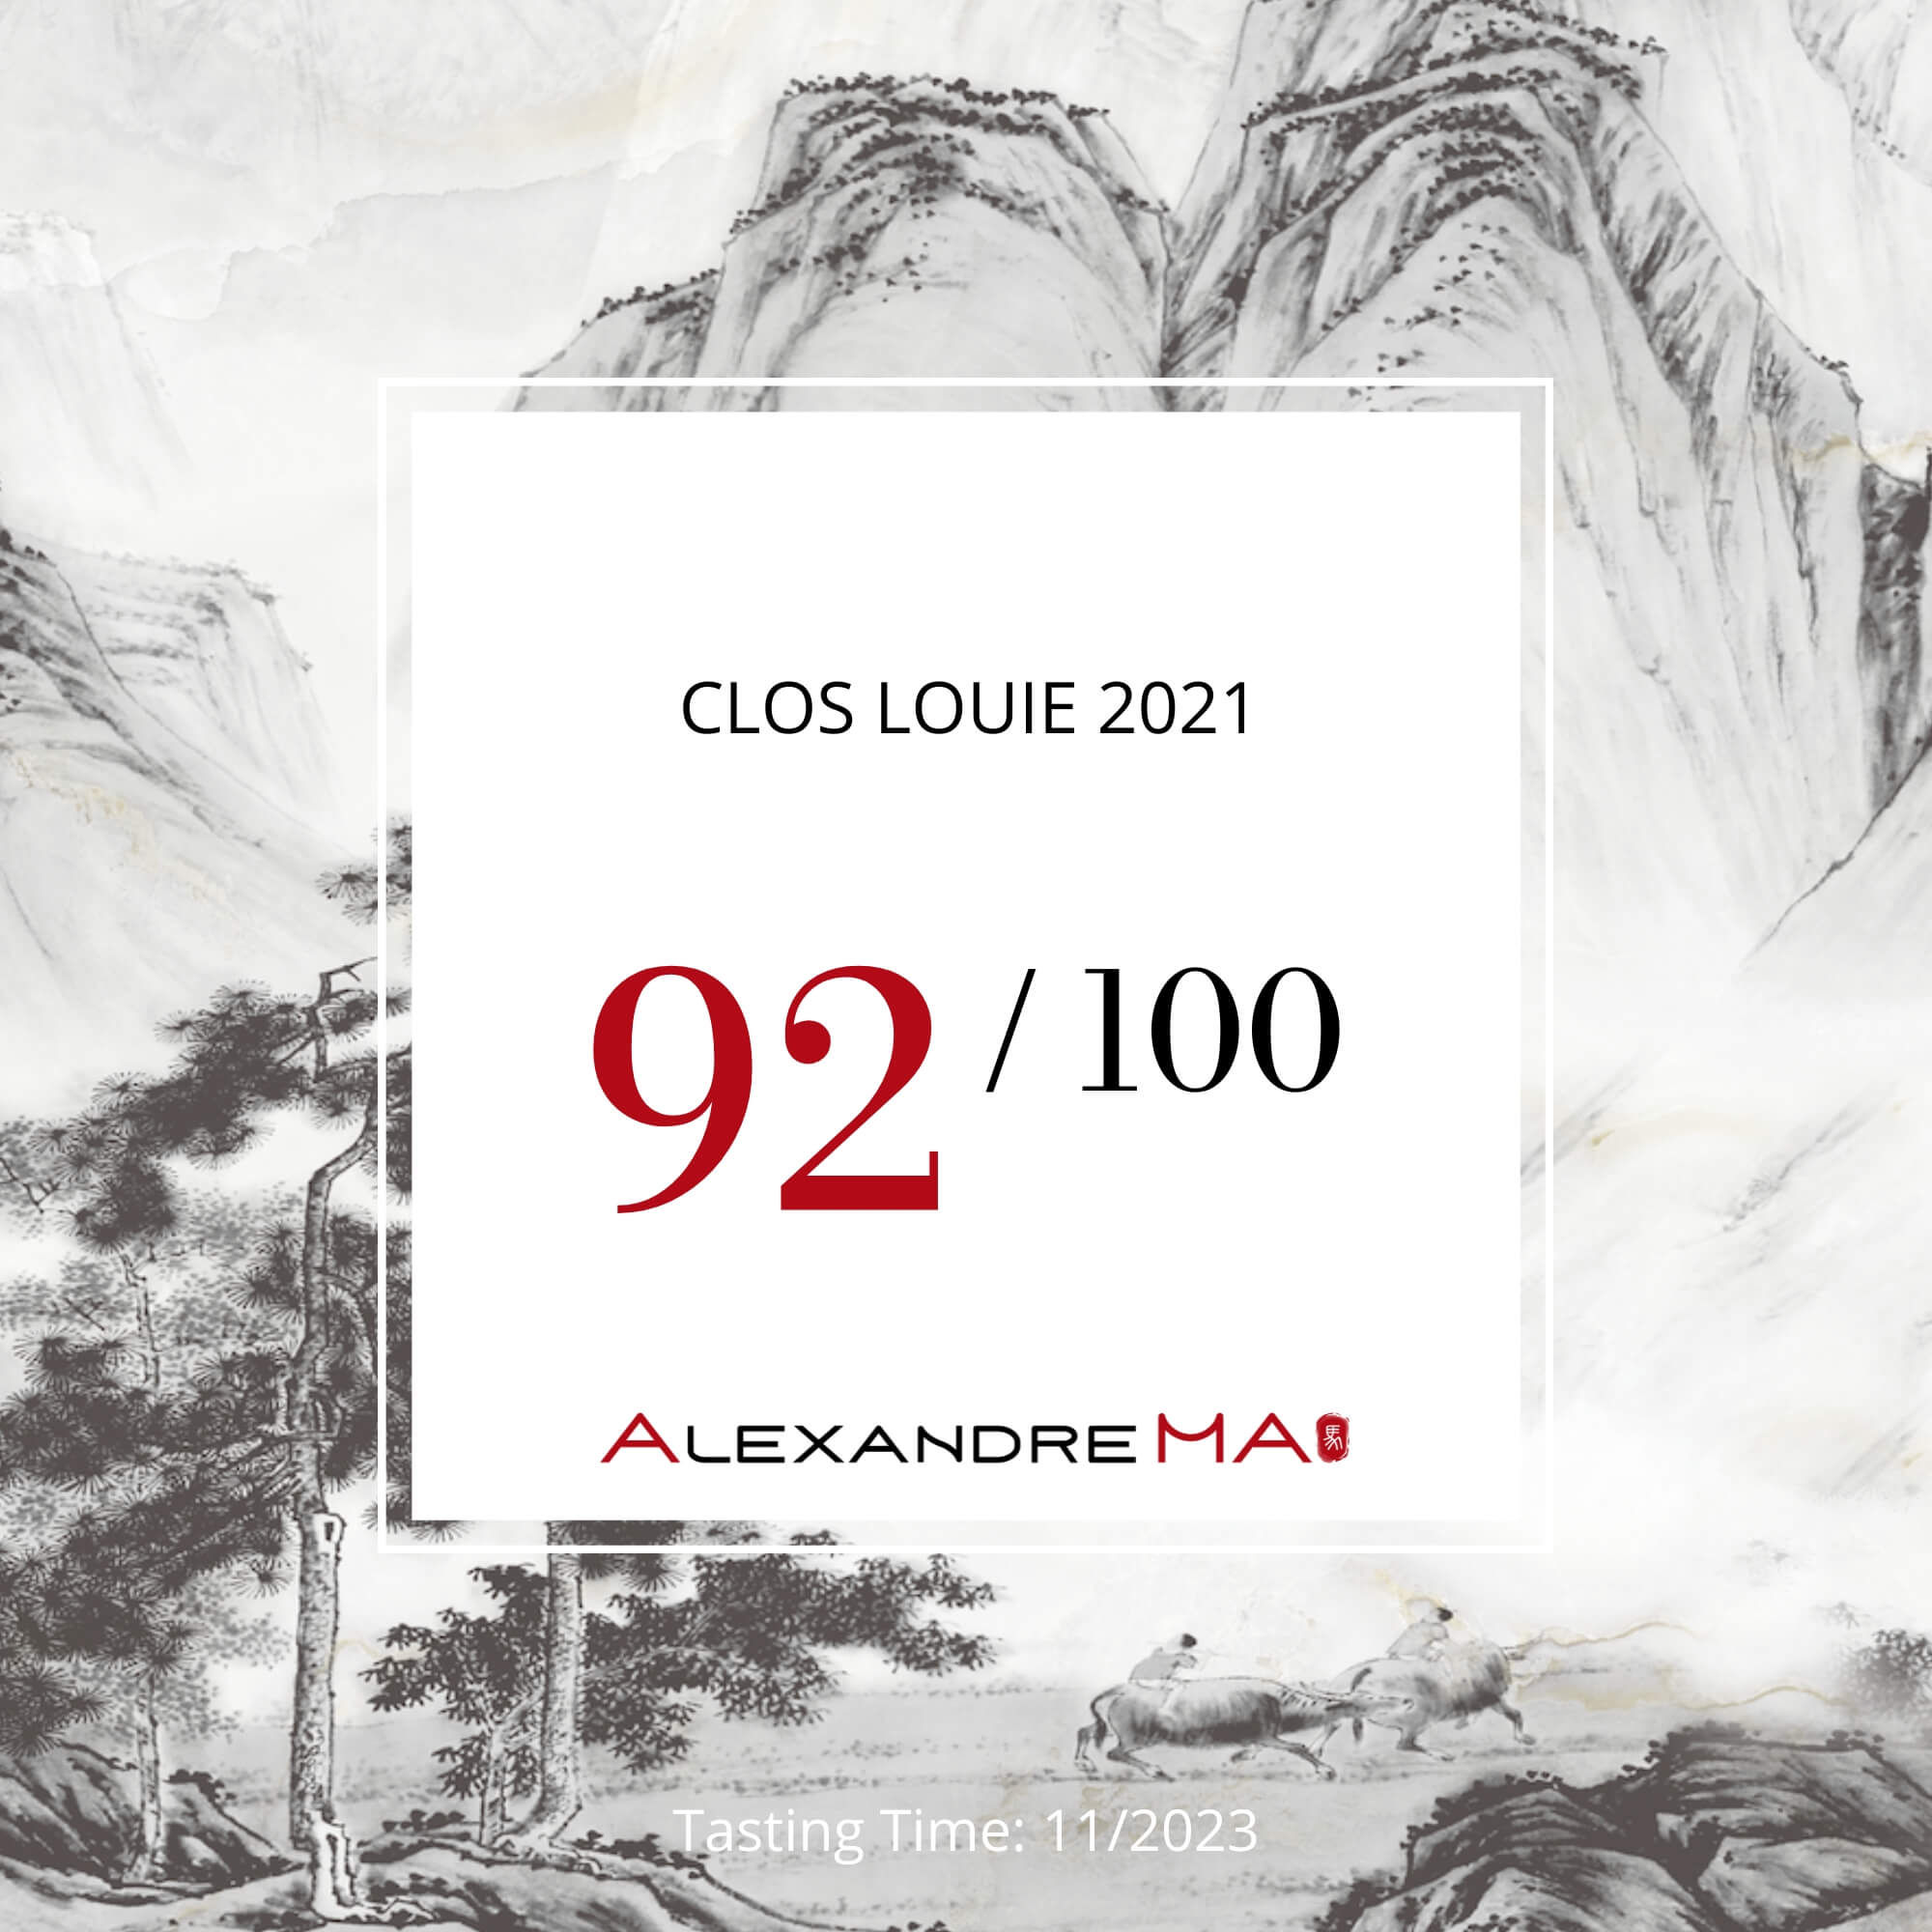 Clos Louie 2021 - Alexandre MA